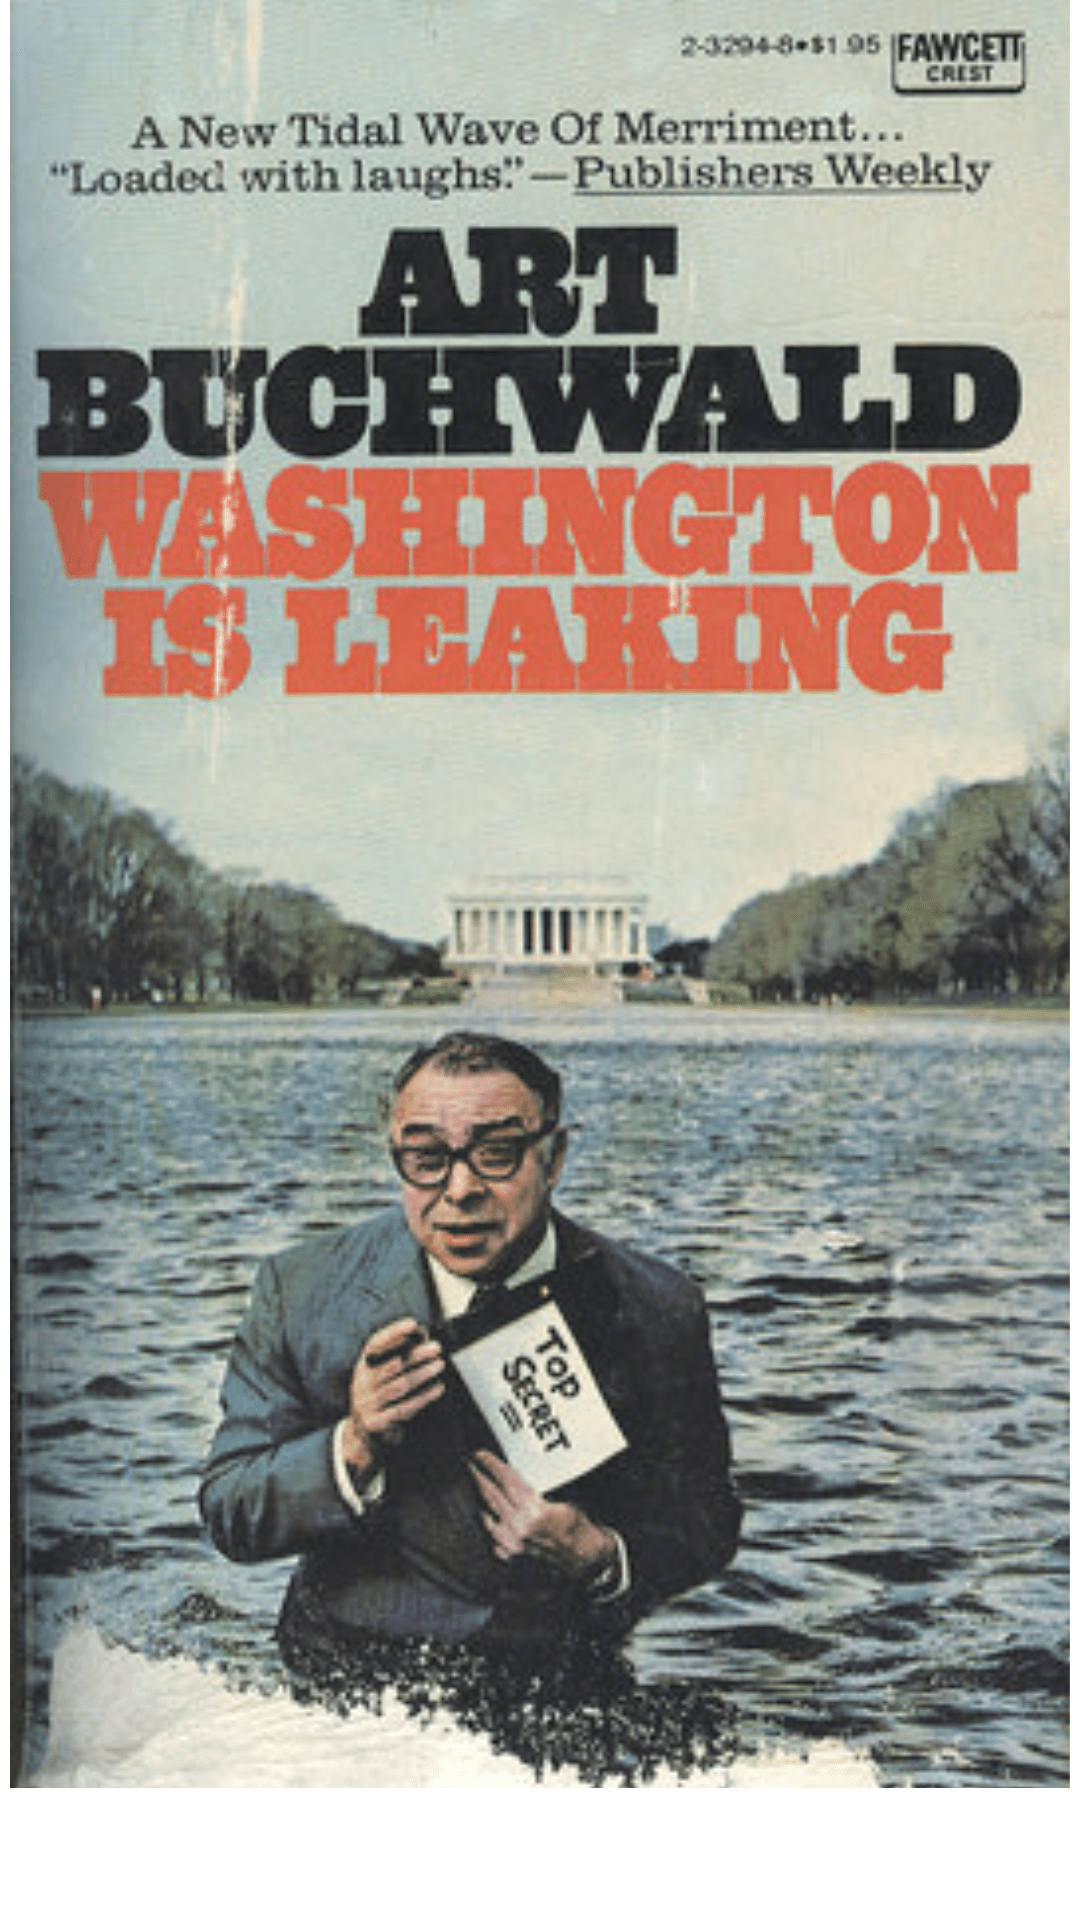 Washington Is Leaking